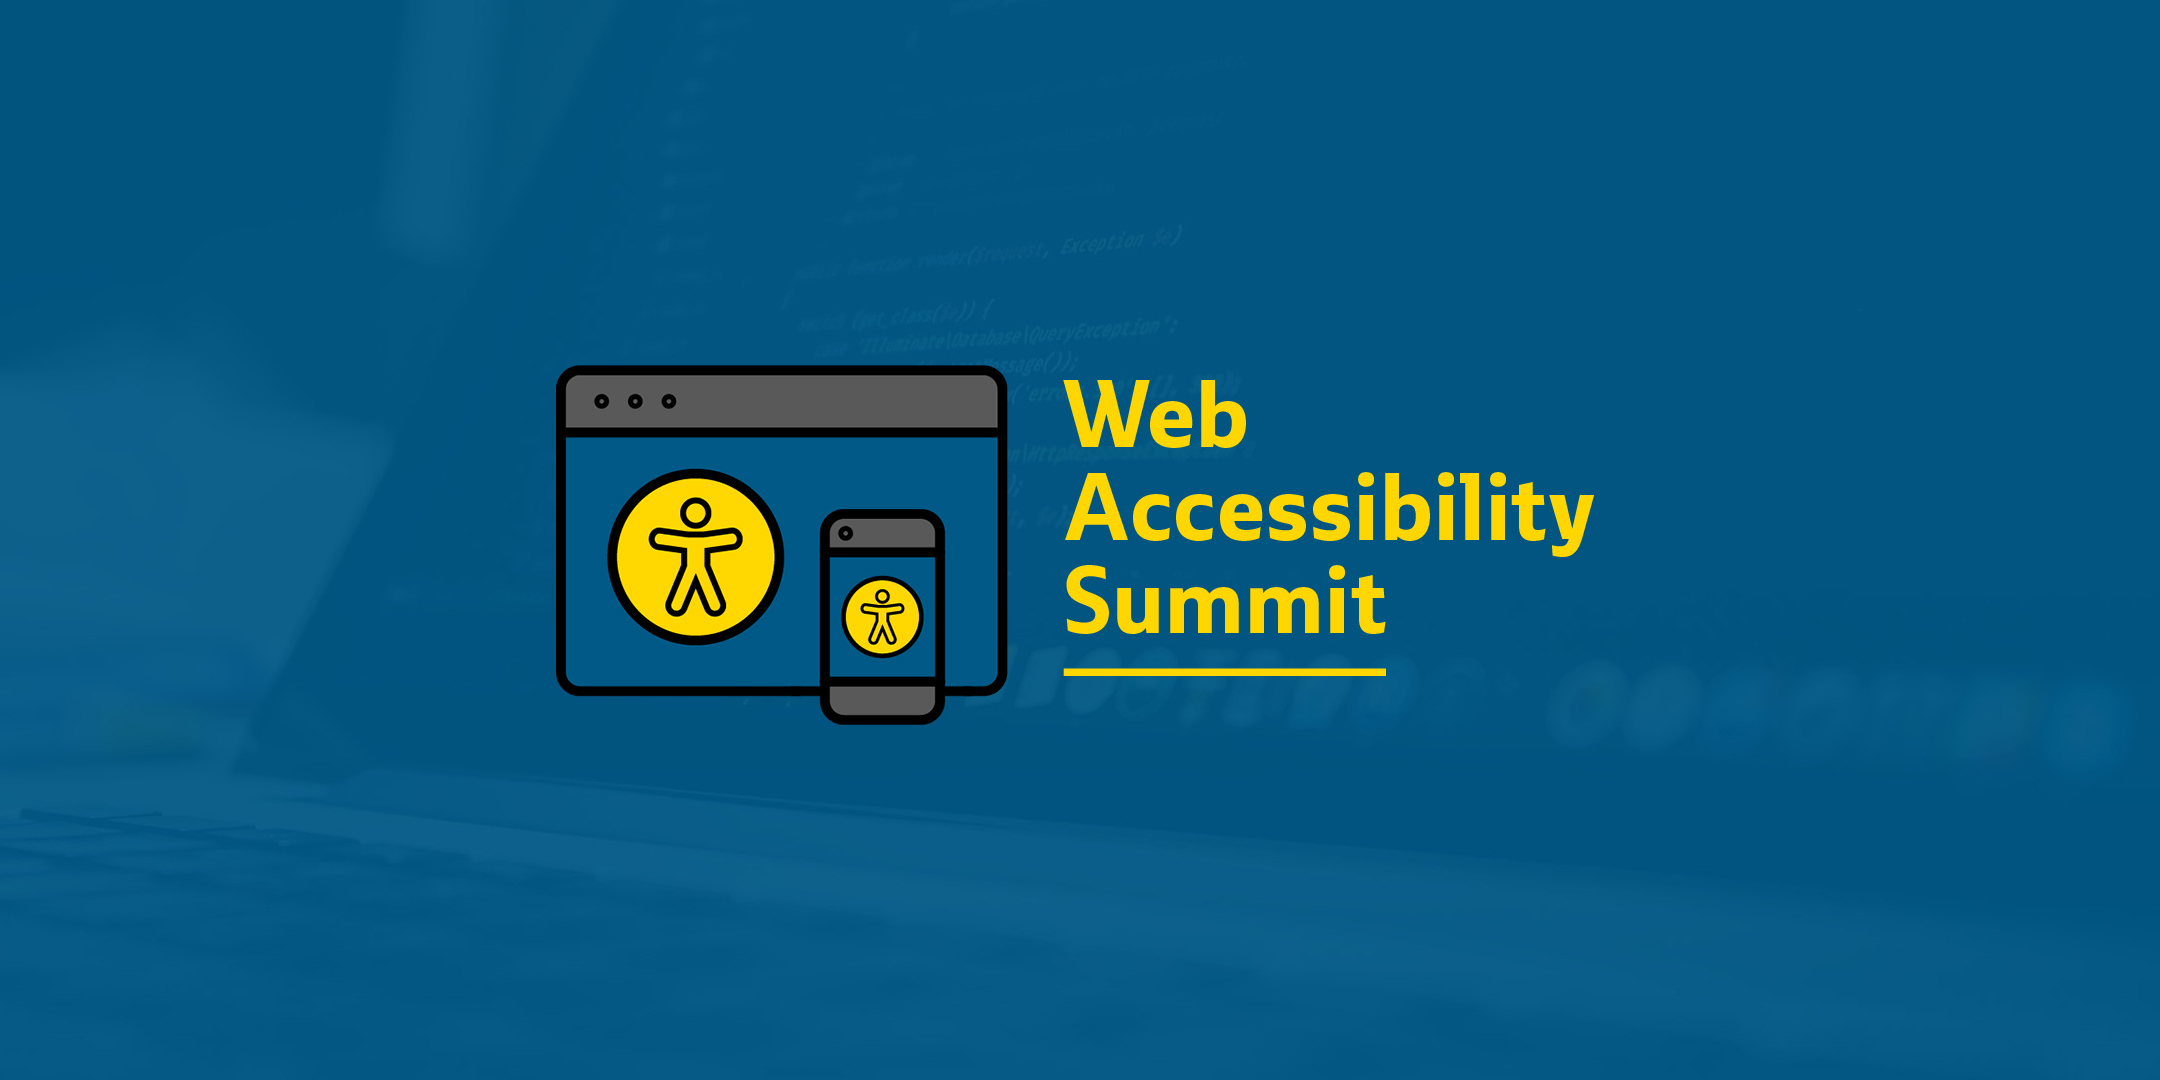 Web Accessibility Summit